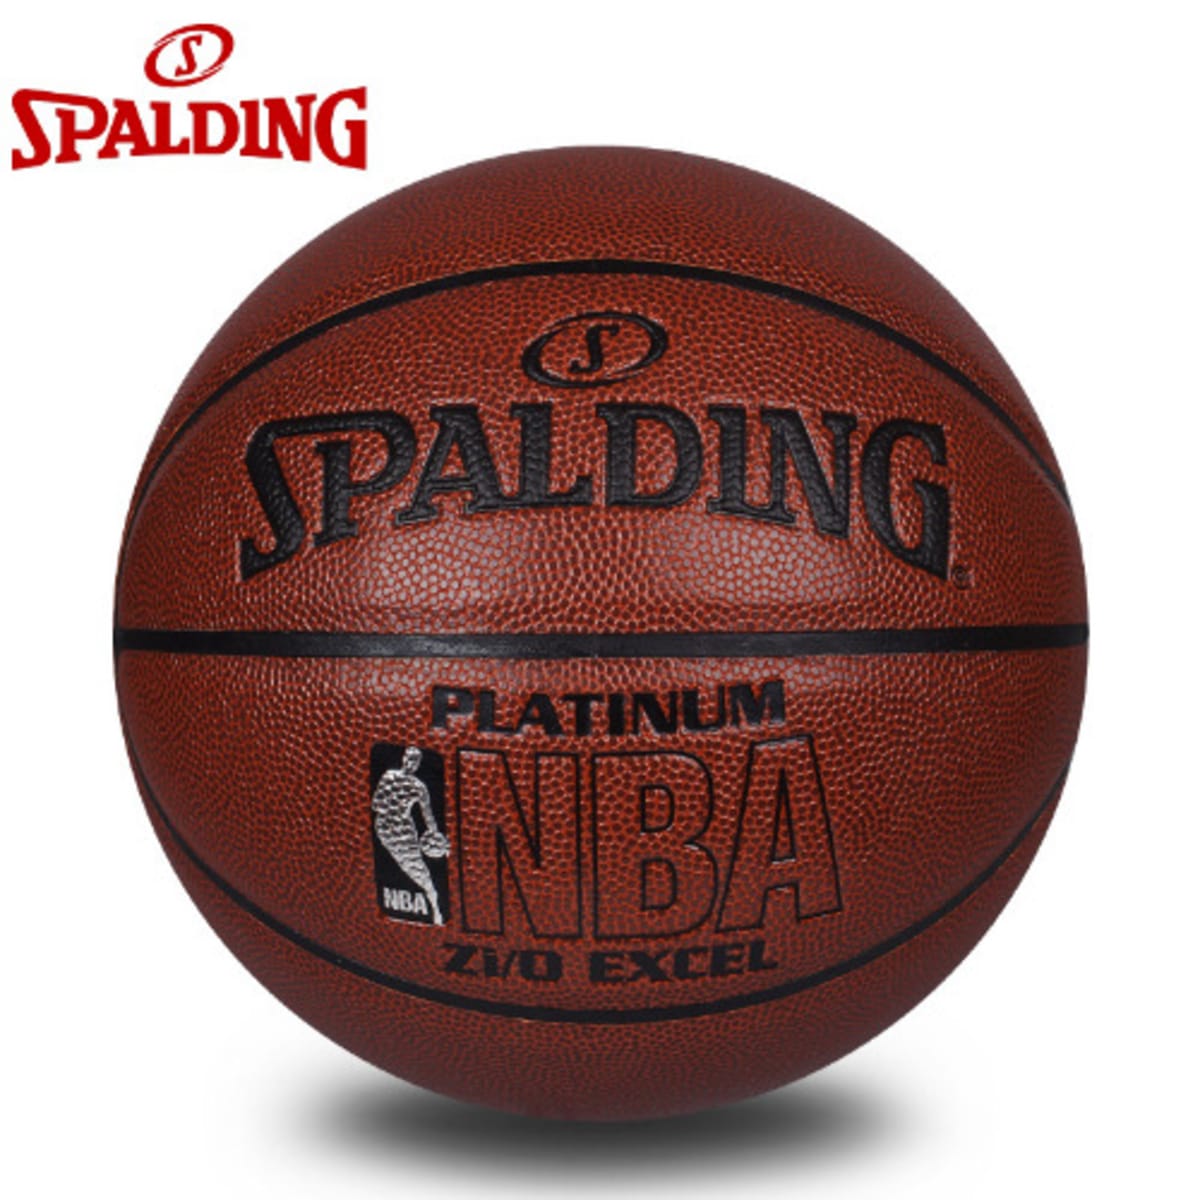 Spalding Nba Professional Online | Konga Shopping Basketball